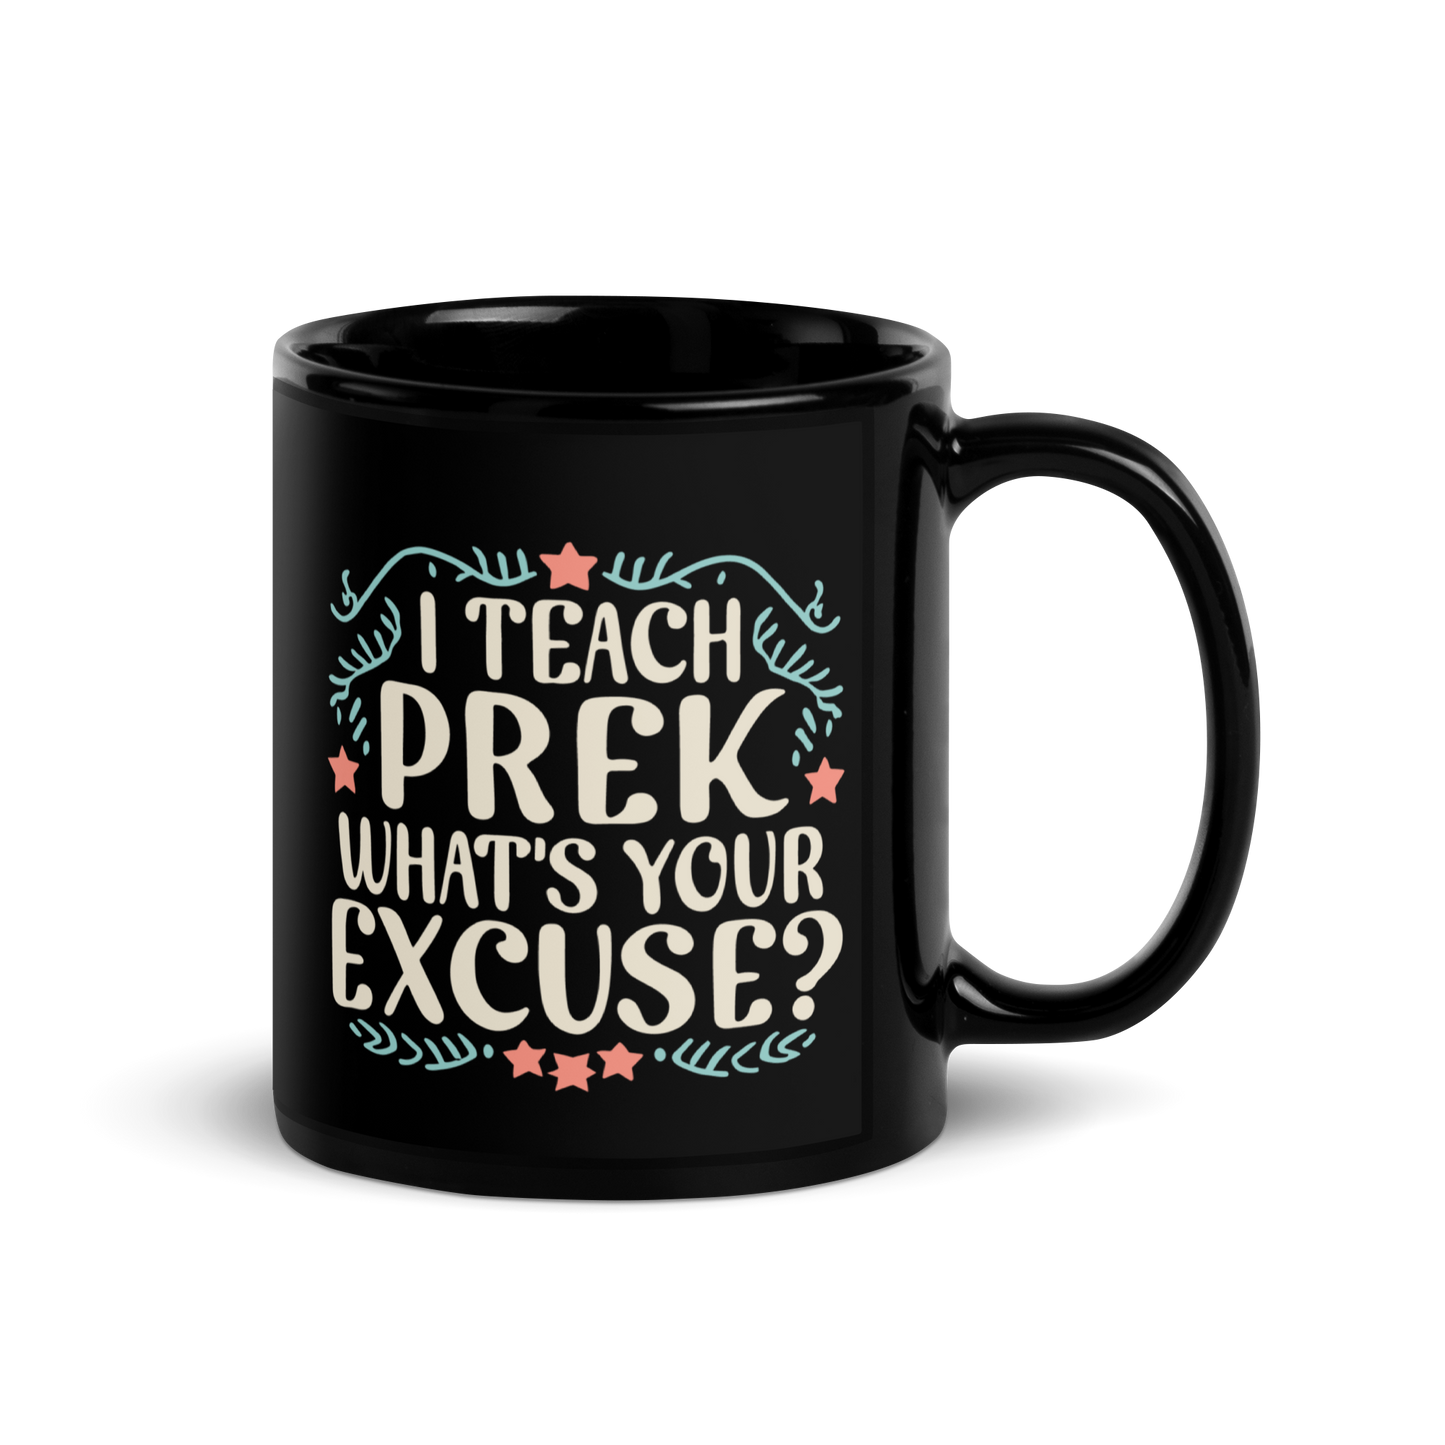 PreK Teacher Mug - "I Teach PreK What's Your Excuse"